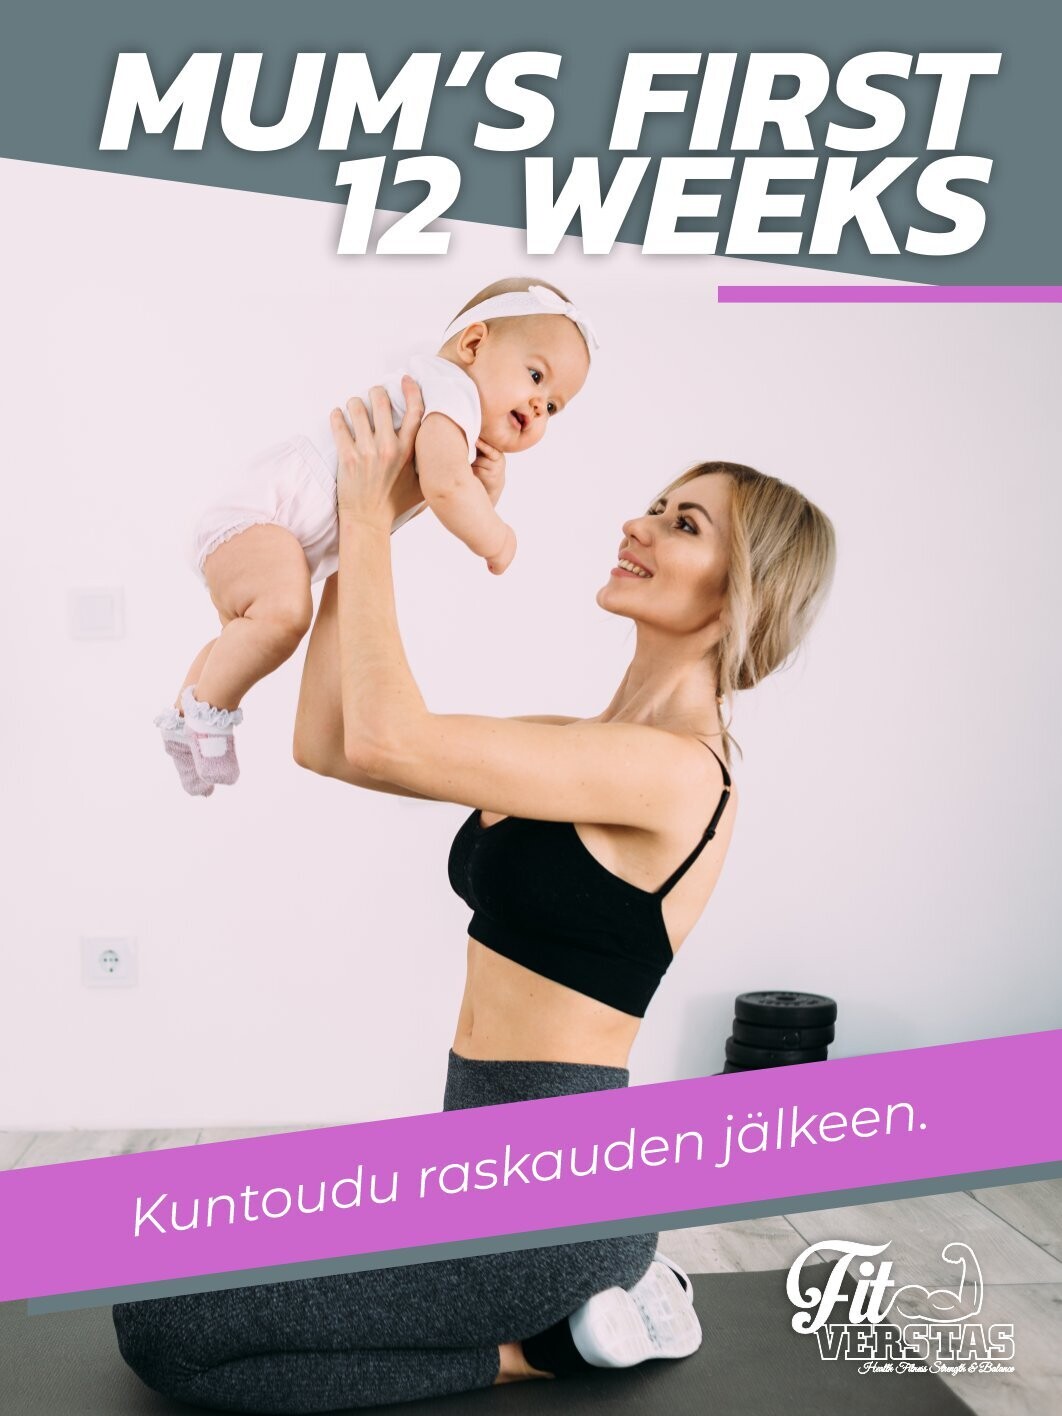 Mum's first 12 weeks